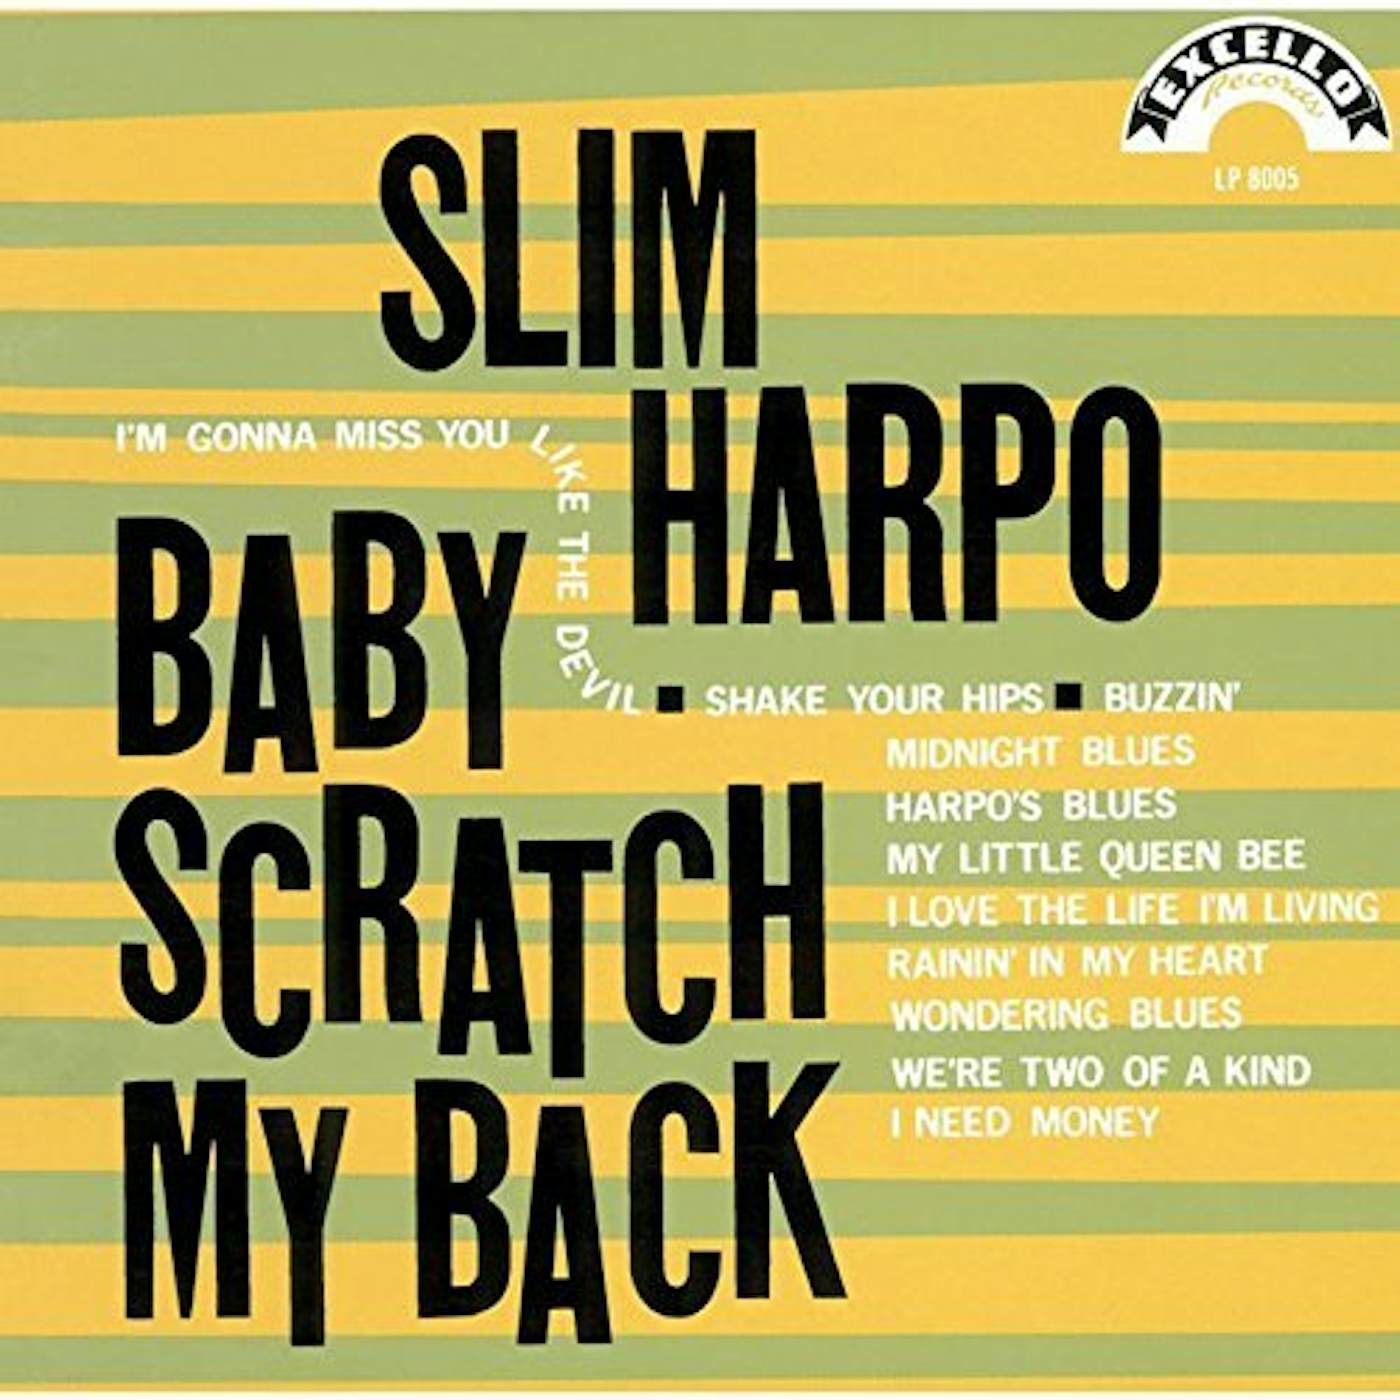 Slim Harpo BABY SCRATCH MY BACK CD